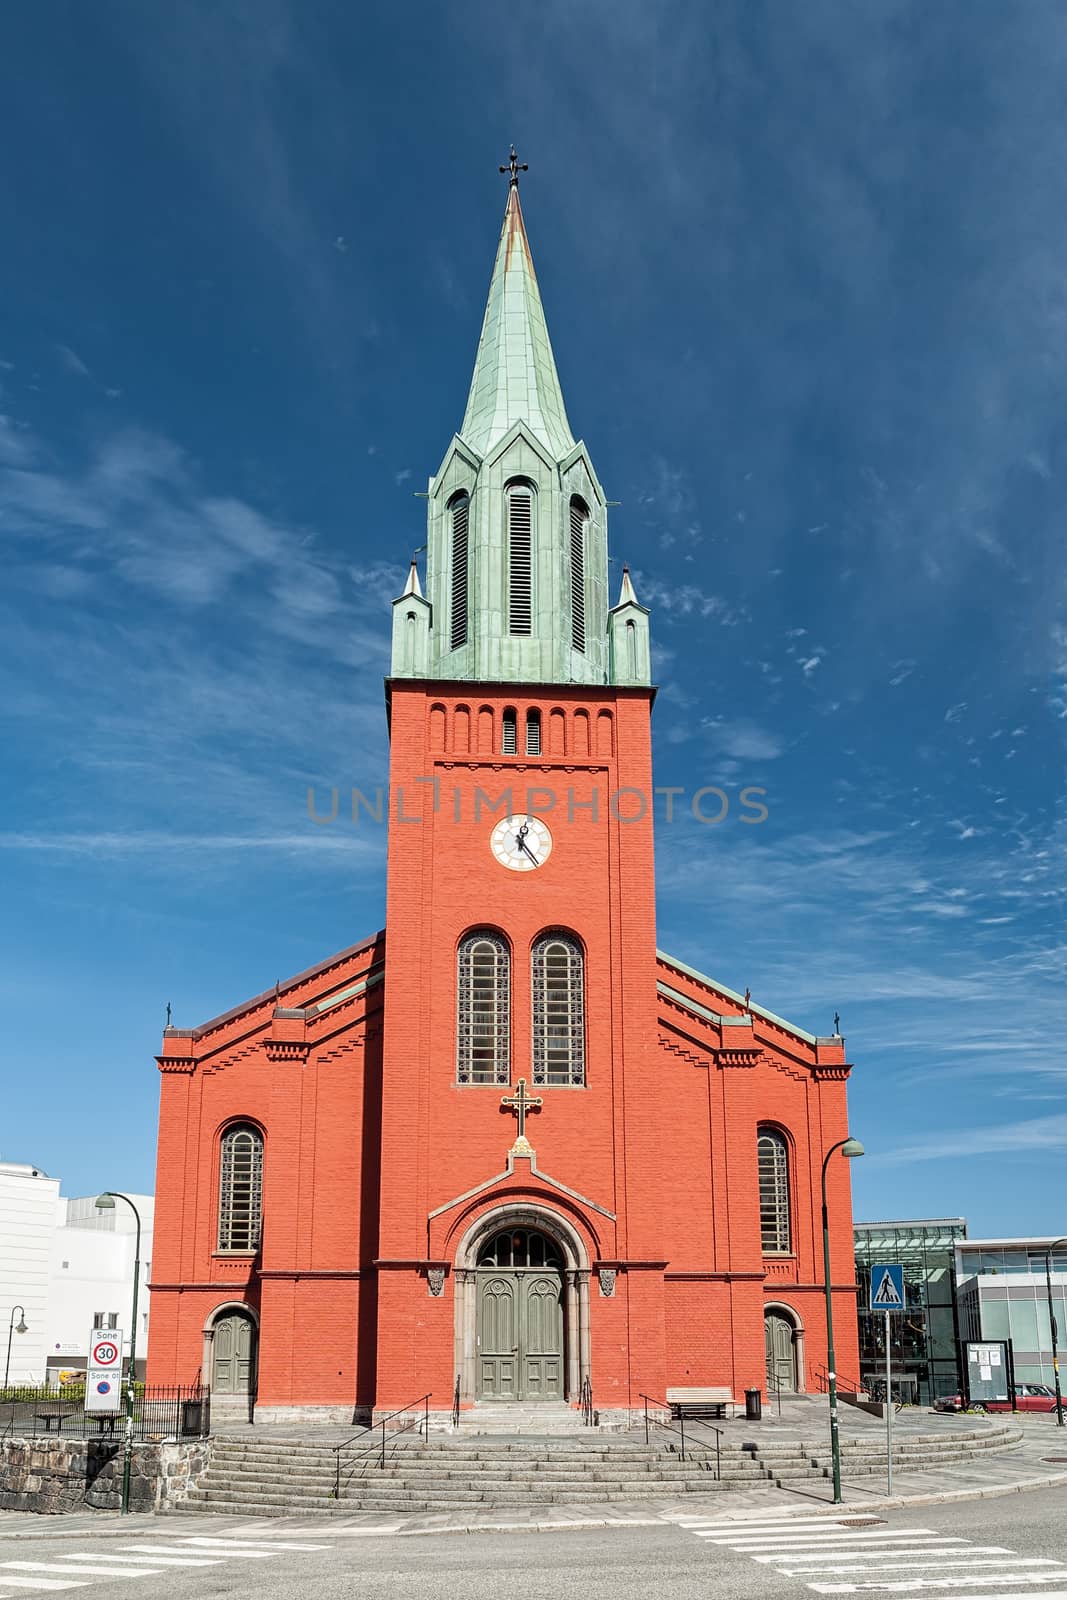 Saint Petri church in Stavanger, Norway by LuigiMorbidelli